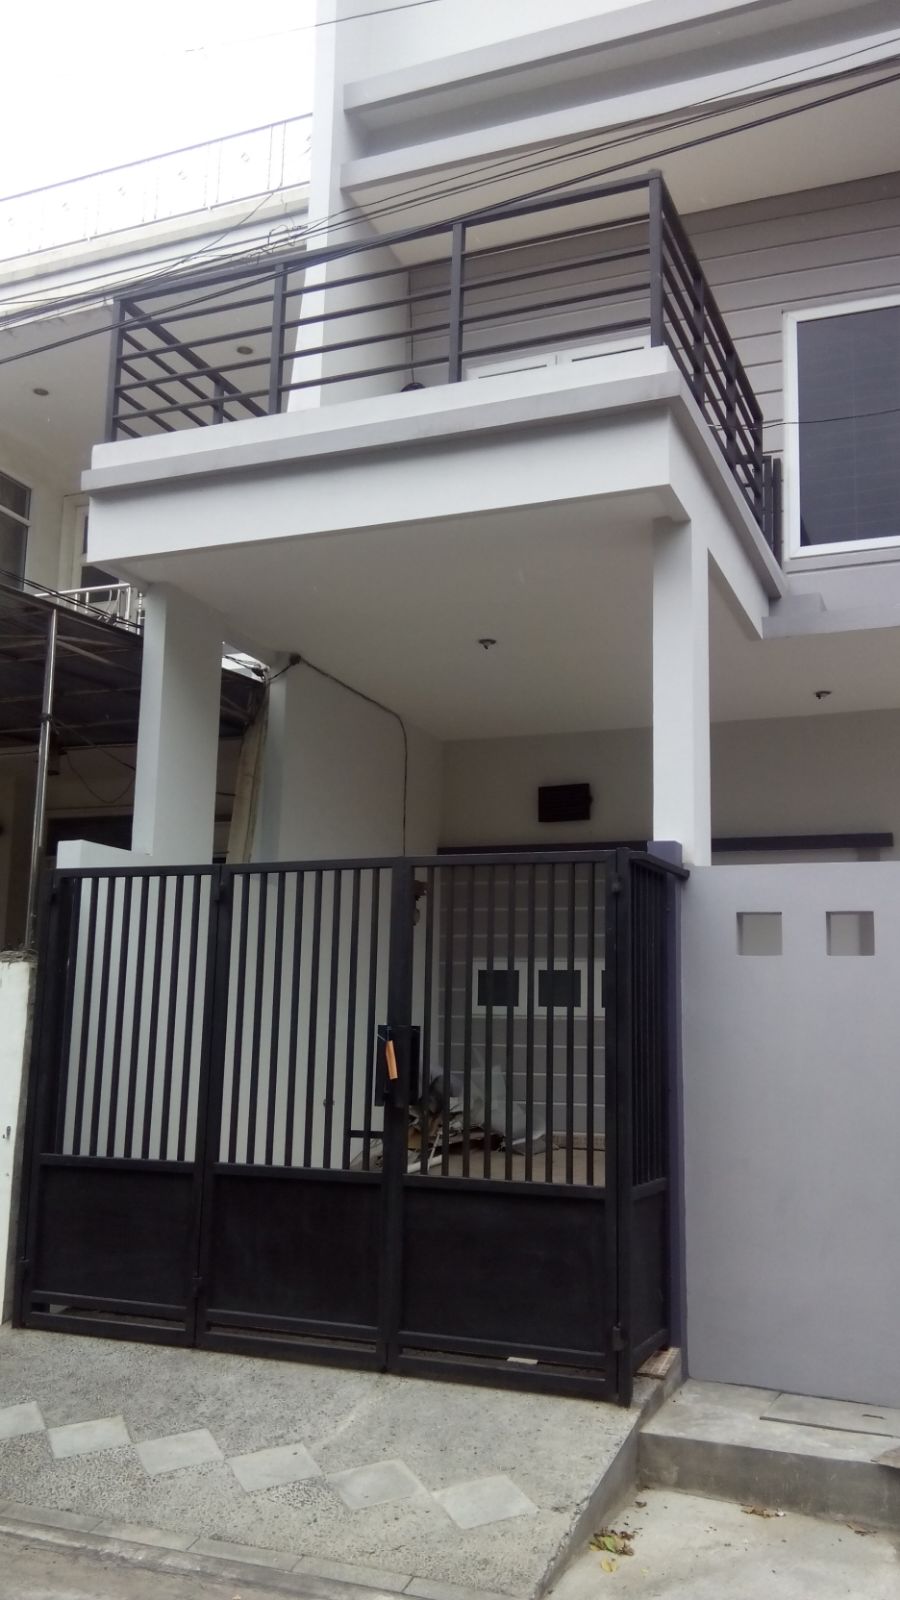 Perhitungan Harga pembuatan pagar Rumah Minimalis - Teralis Jakarta